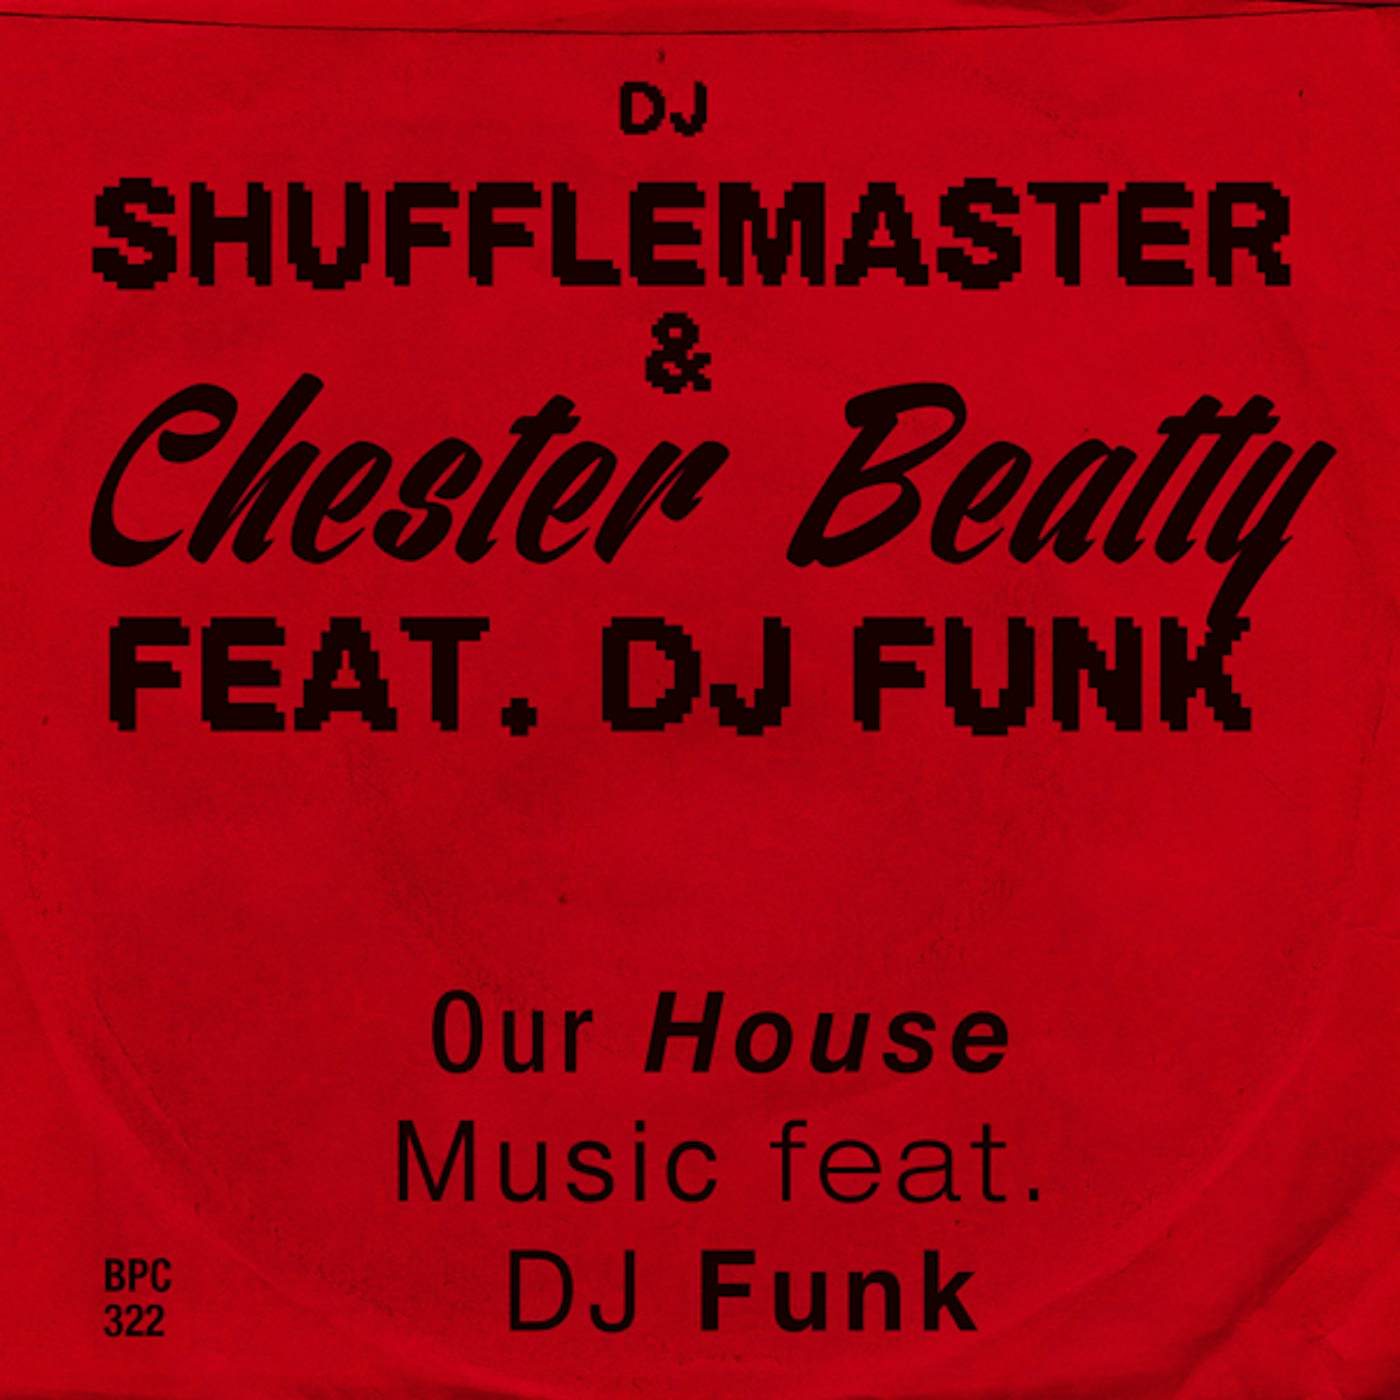 Dj Shufflemaster & Chester Beatty OUR HOUSE MUSIC FEAT. DJ FUNK Vinyl Record